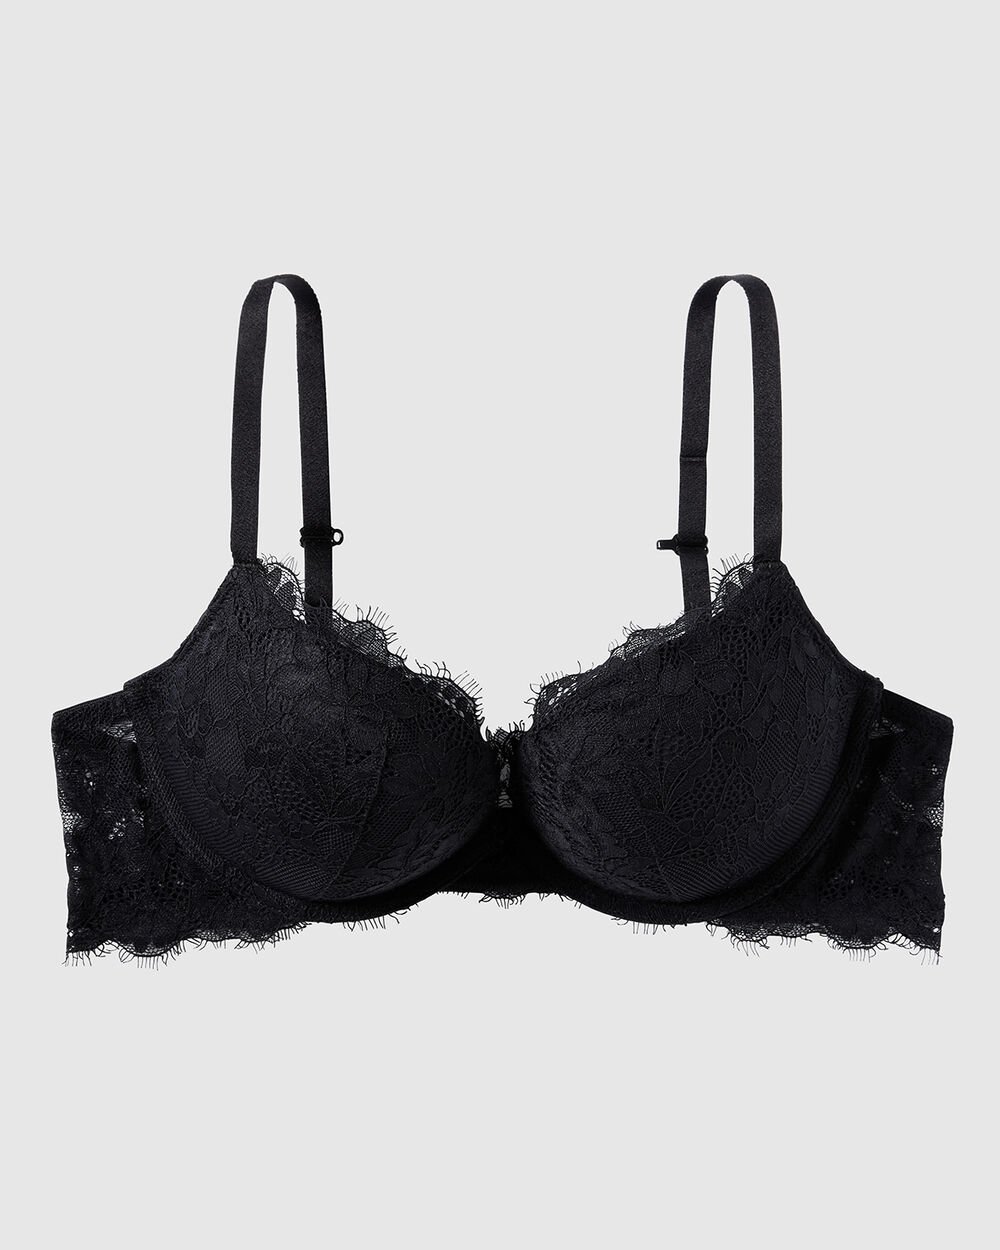 Secret possessions lace bra Size: 36/80 B (push up) Price: 10$ ✨